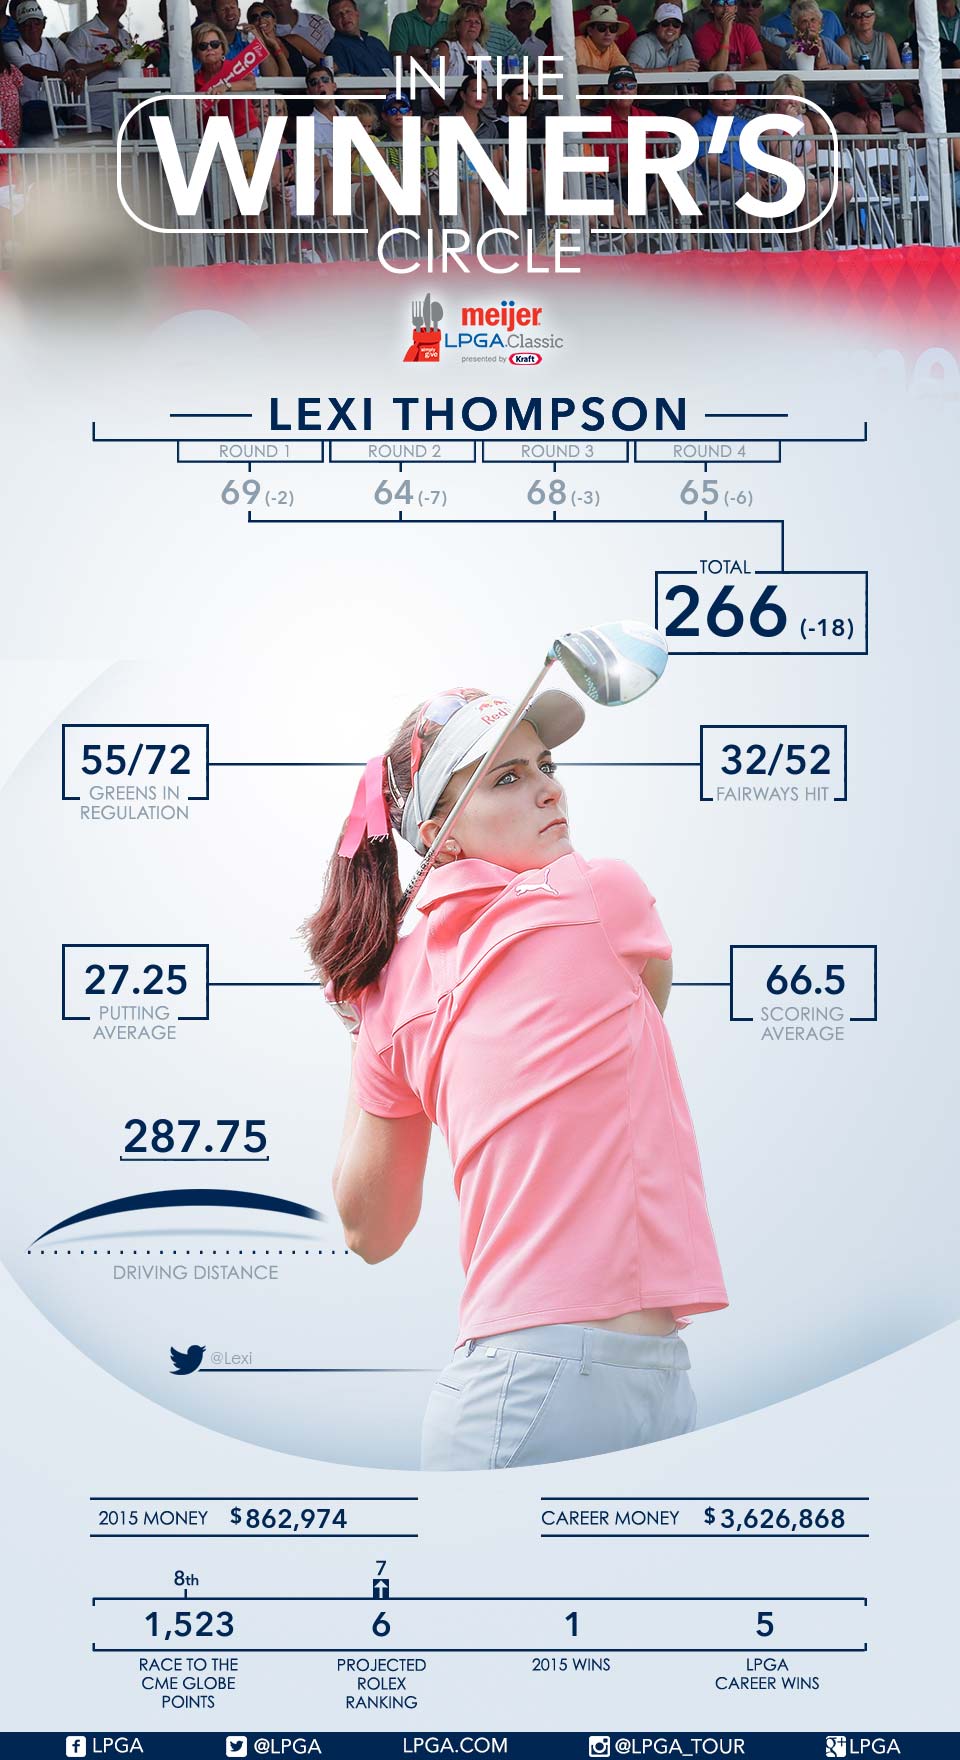 Lexi Thompson wins the 2015 Meijer LPGA Classic